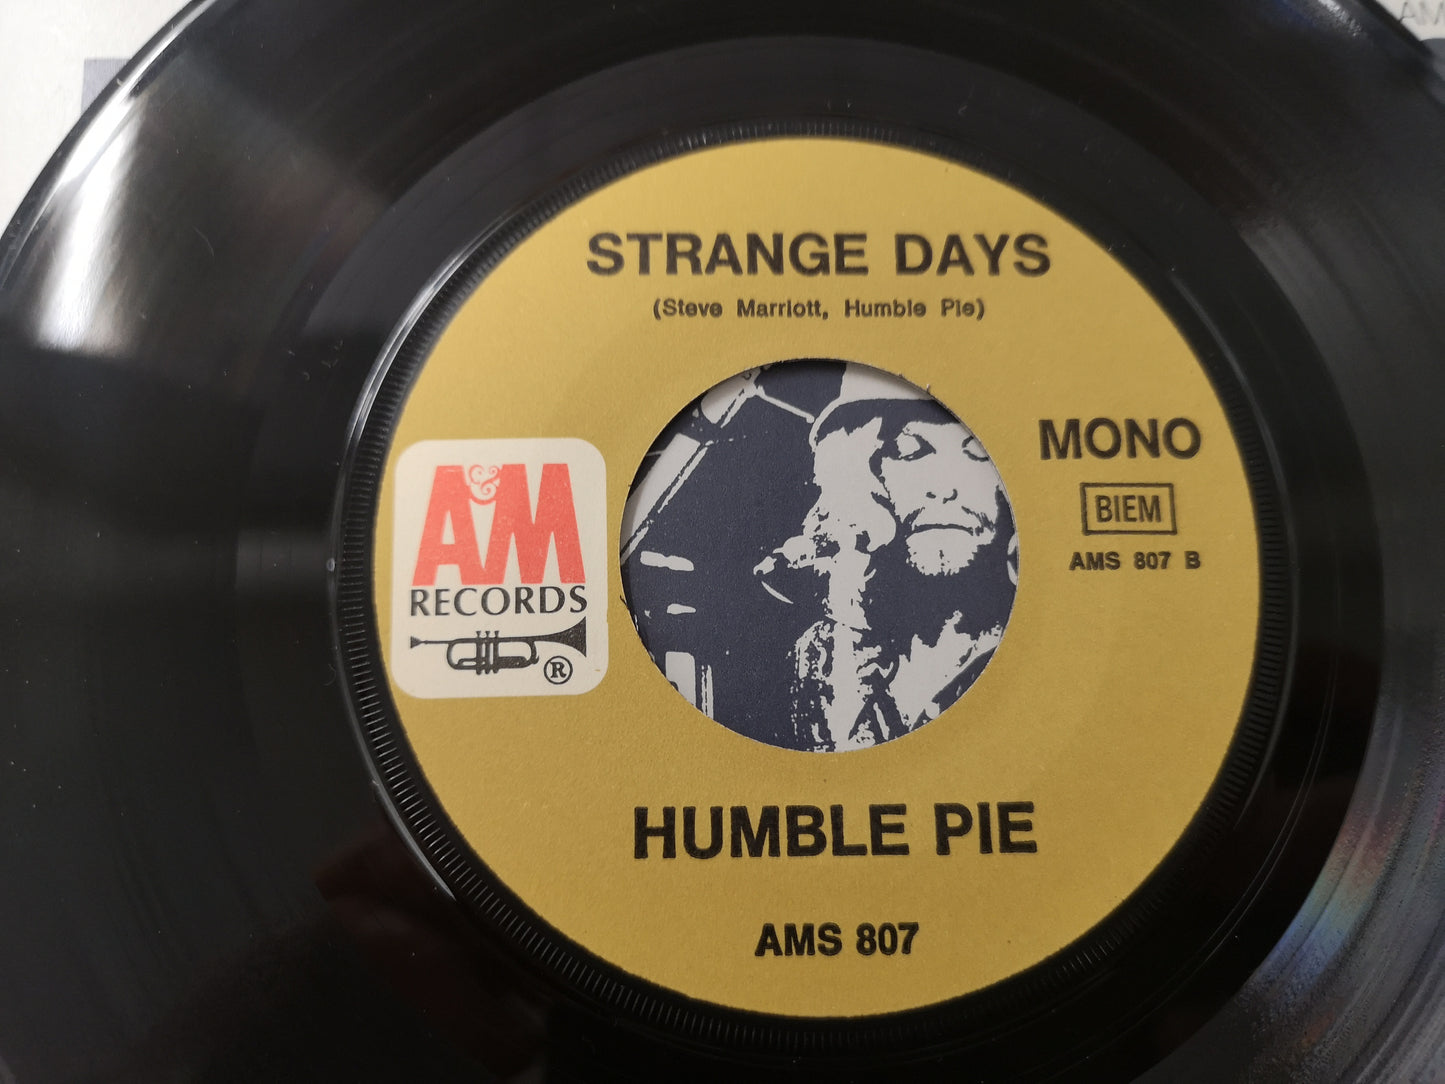 Humble Pie "Big Black Dog" Orig France Mono 1970 M-/EX (7" Single)